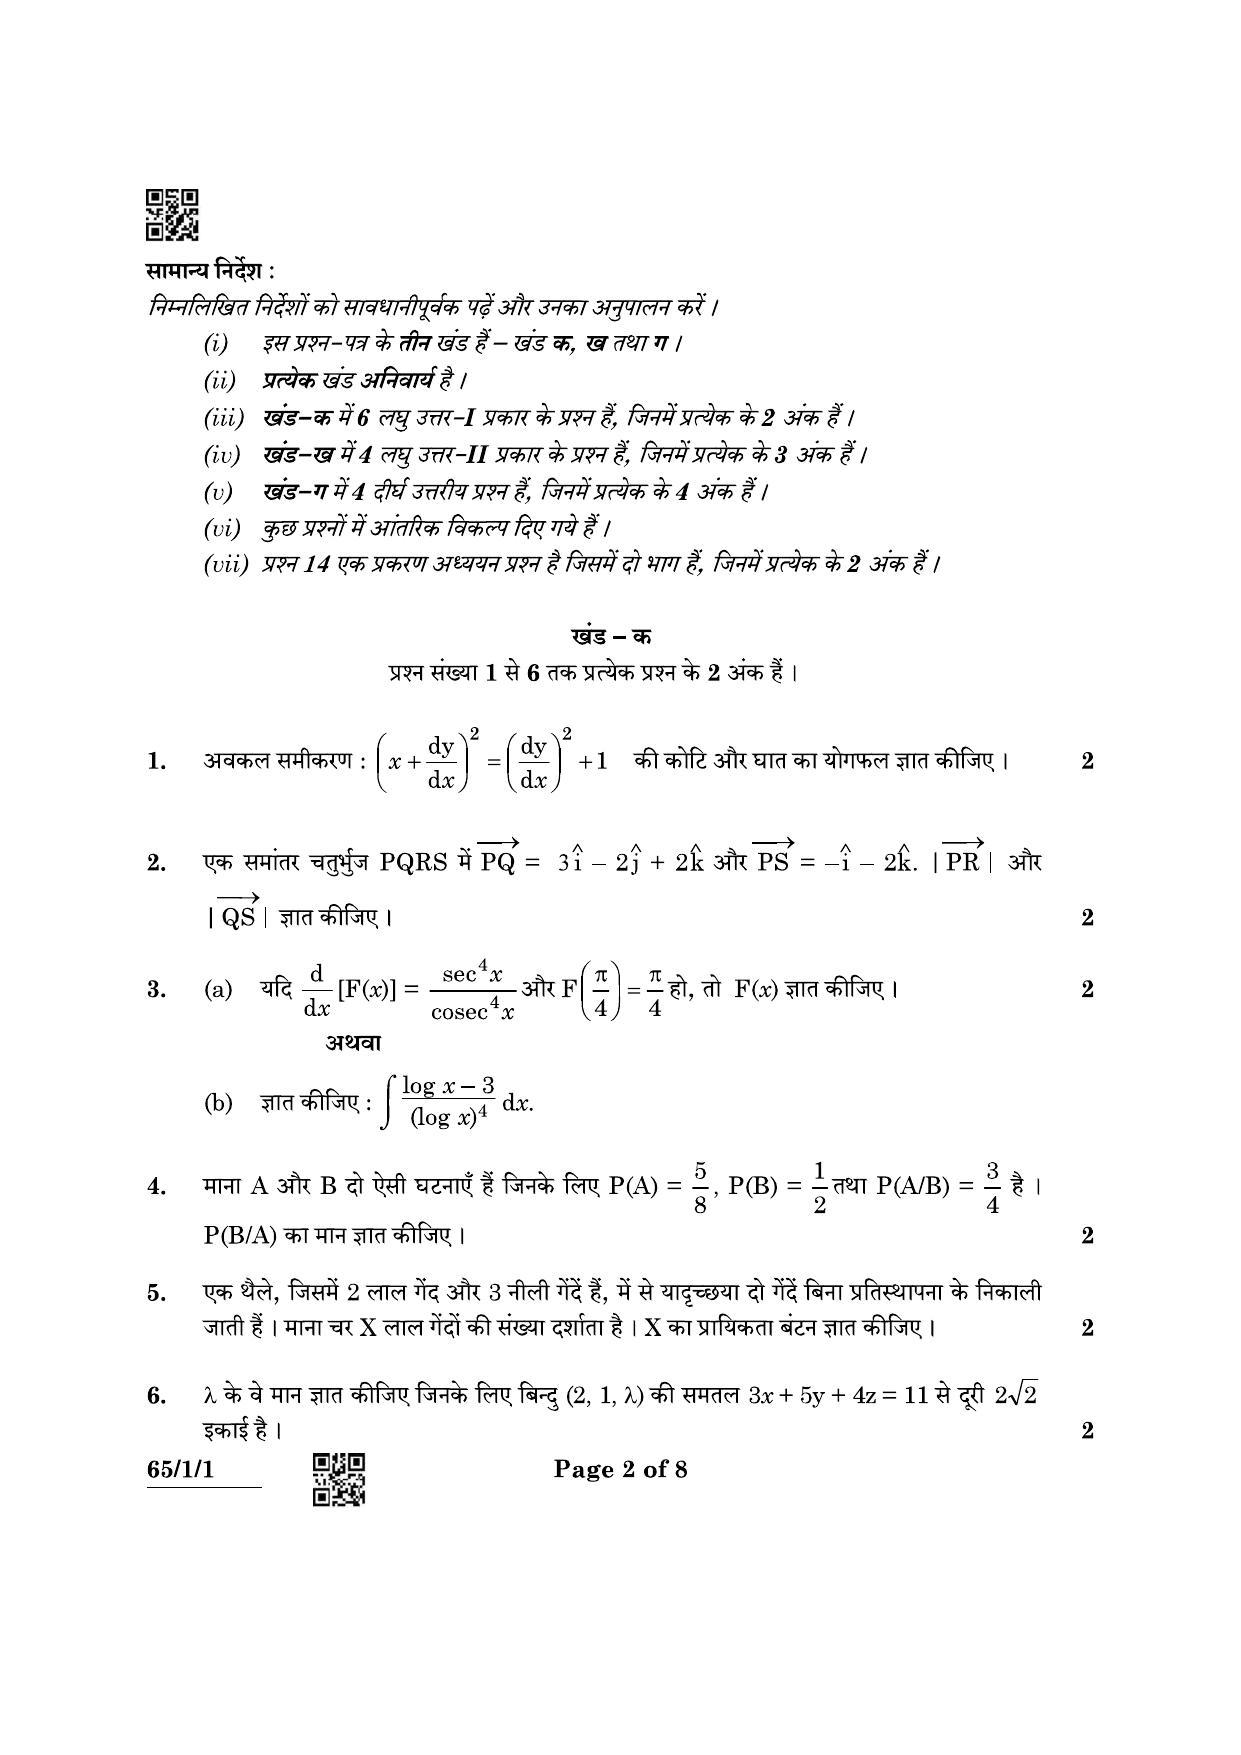 CBSE Class 12 65-1-1 Mathematcs 2022 Question Paper - Page 2